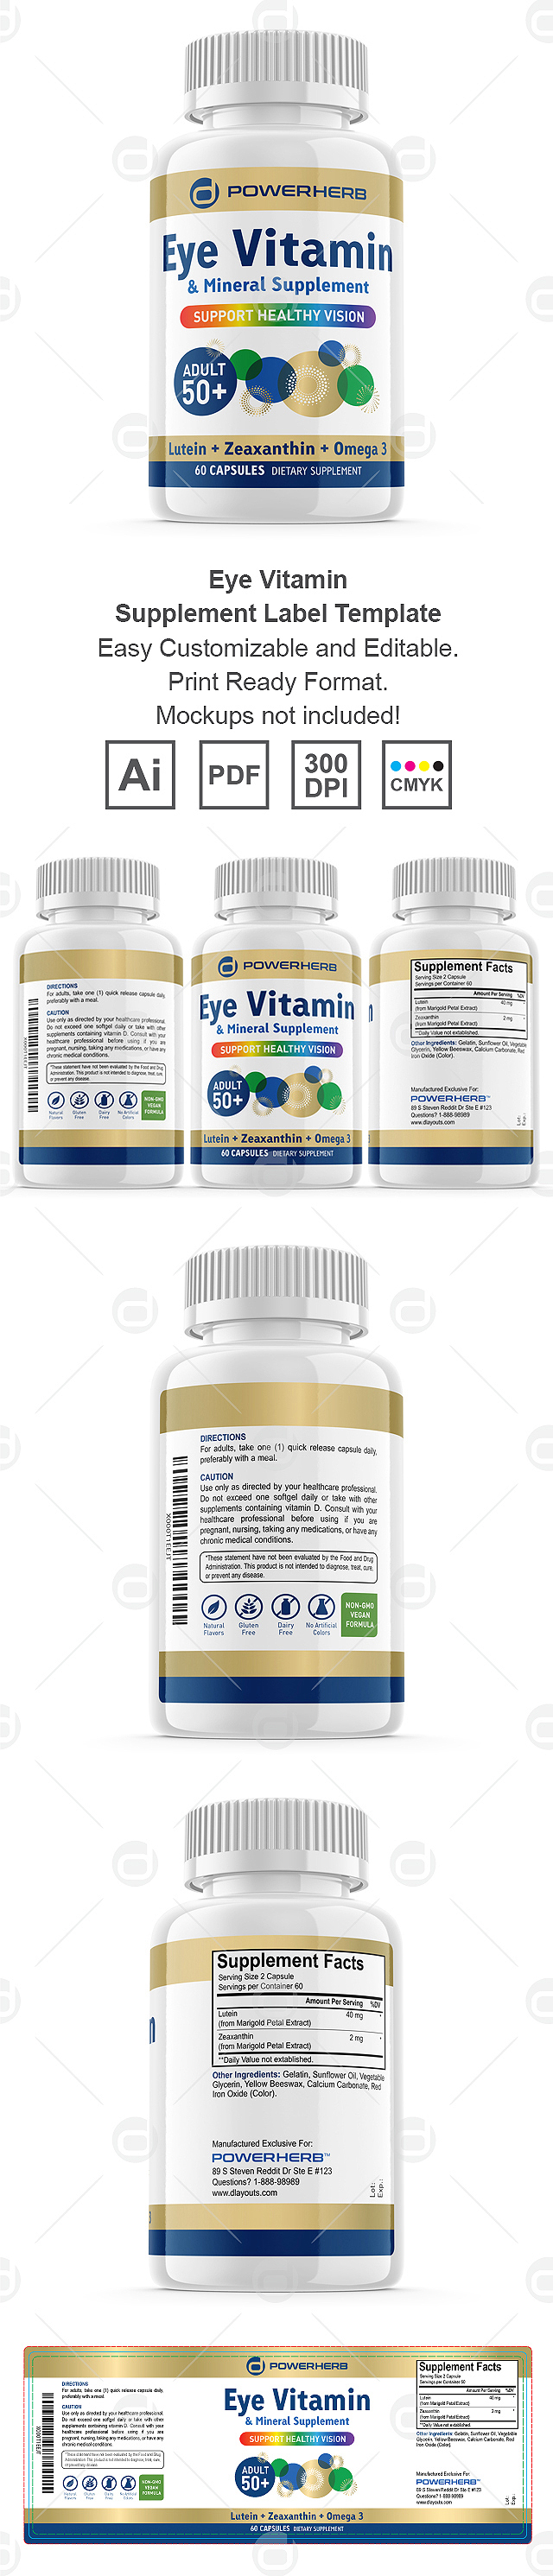 Eye Vitamin Supplement Label Template